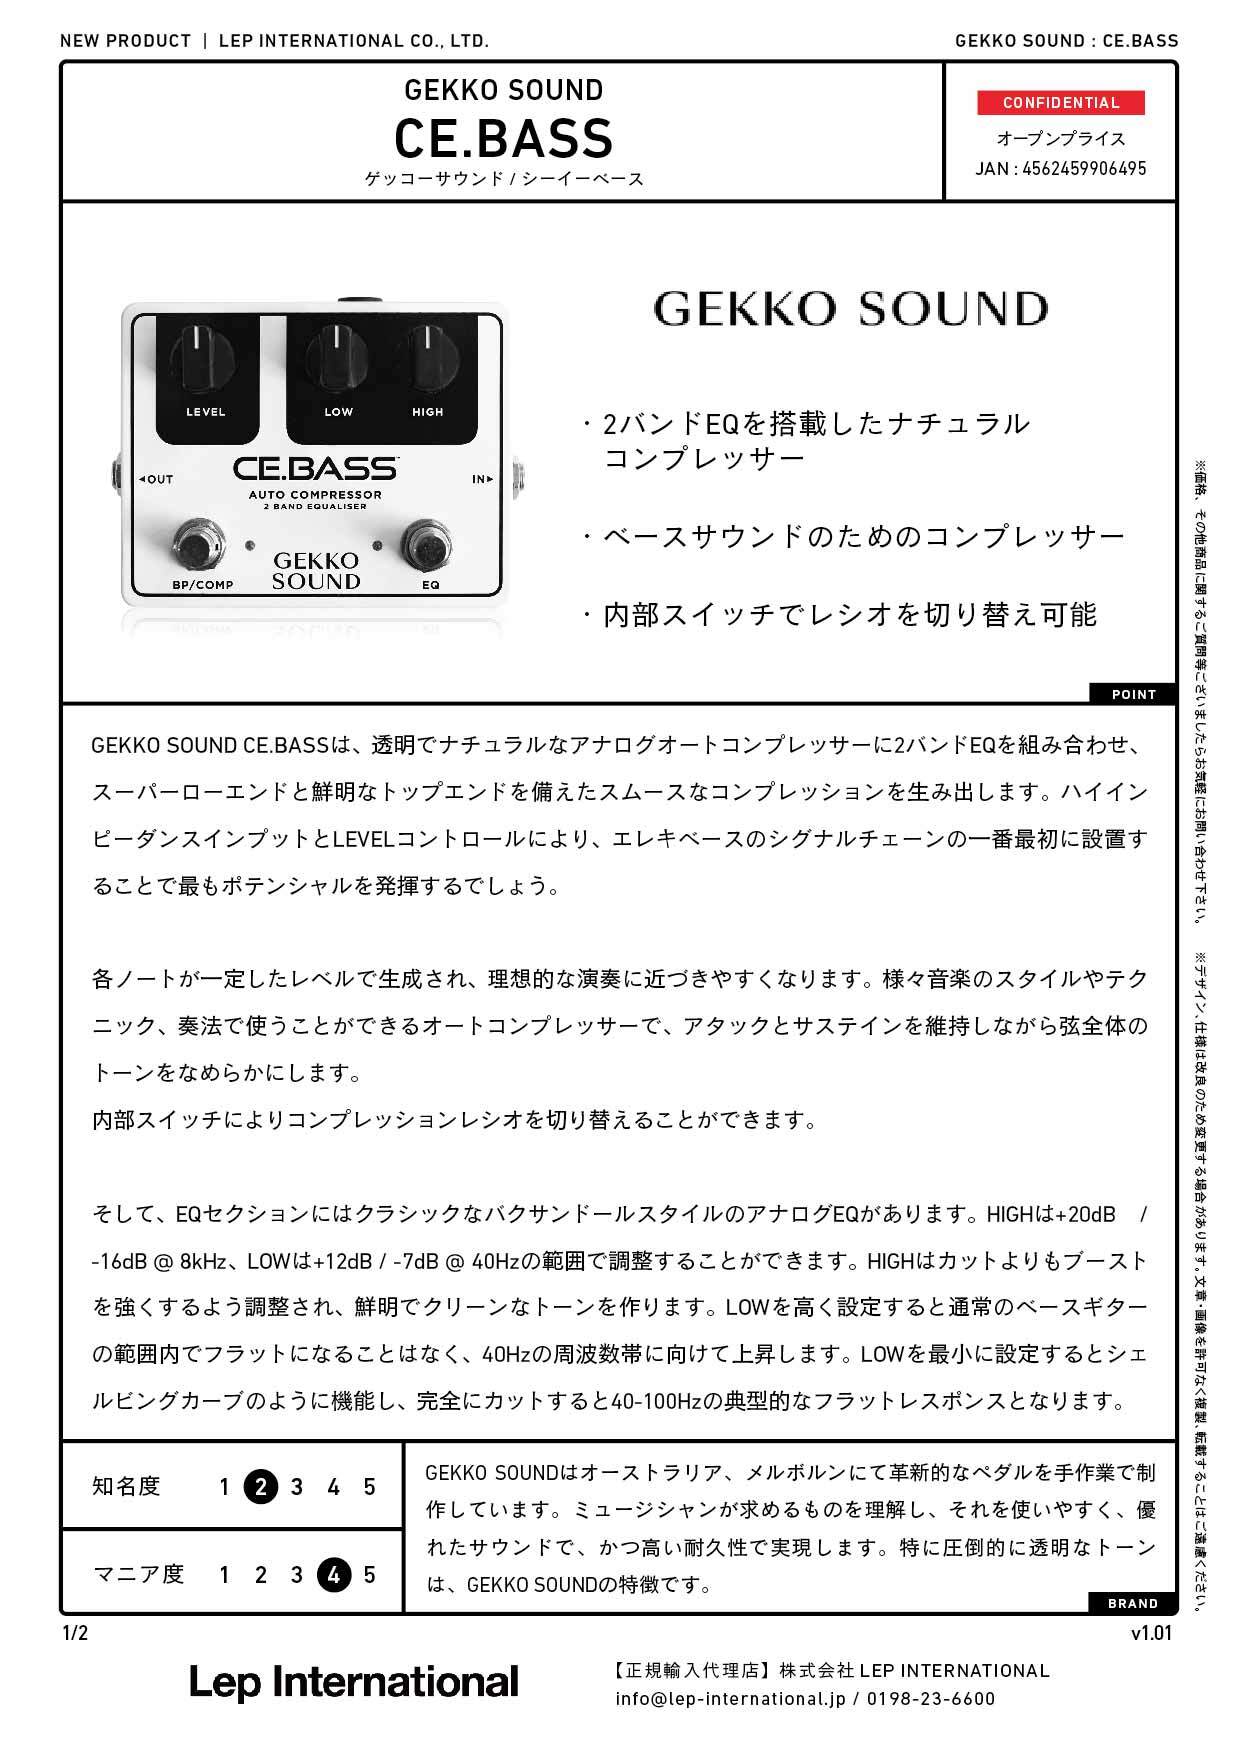 GEKKO SOUND / CE.BASS